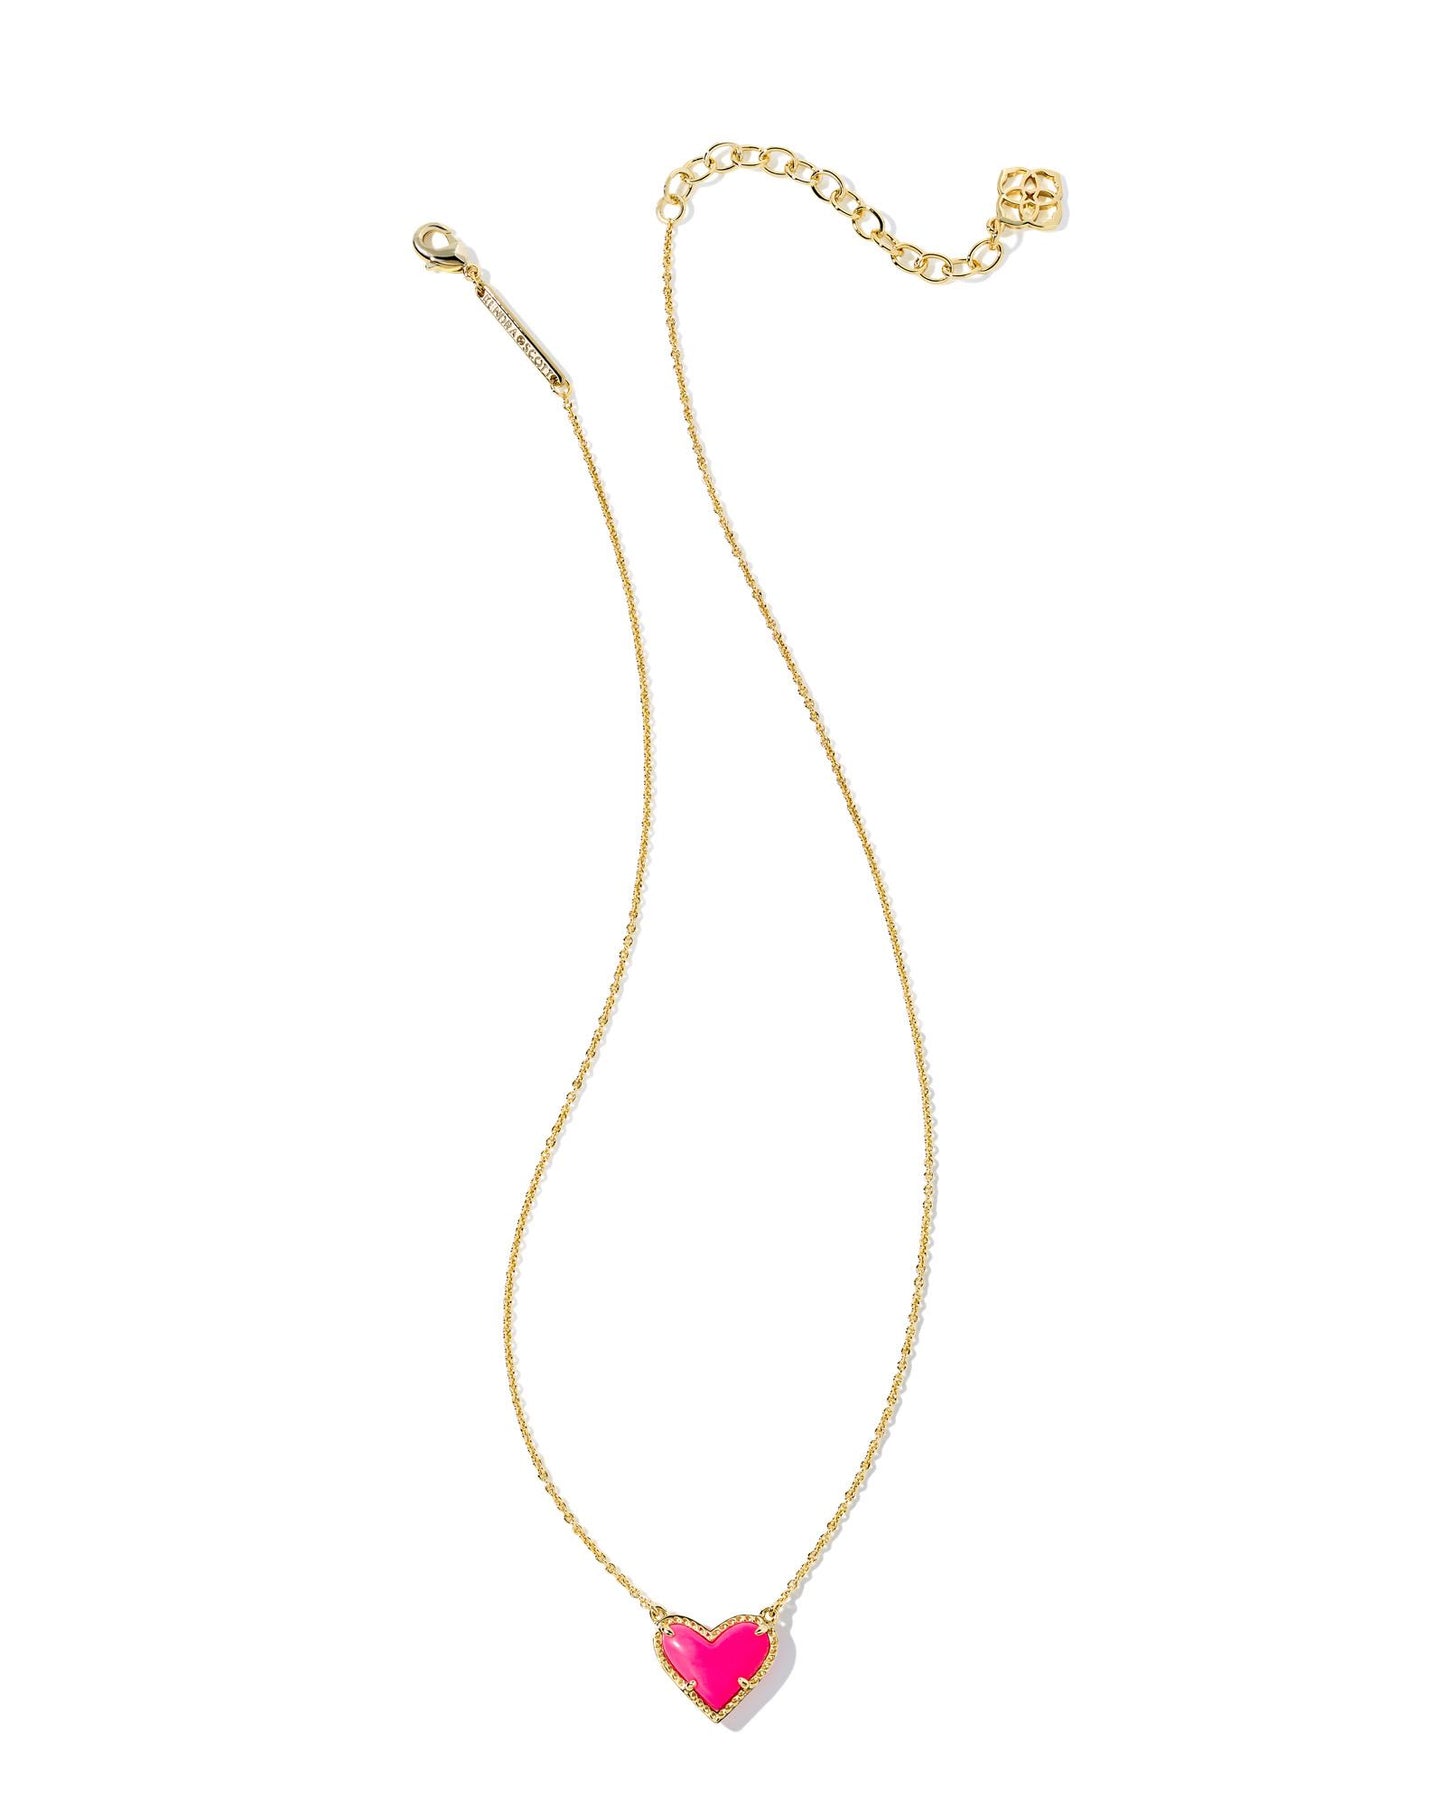 Kendra Scott Ari Heart Pendant Necklace - Gold Neon Pink Magensite